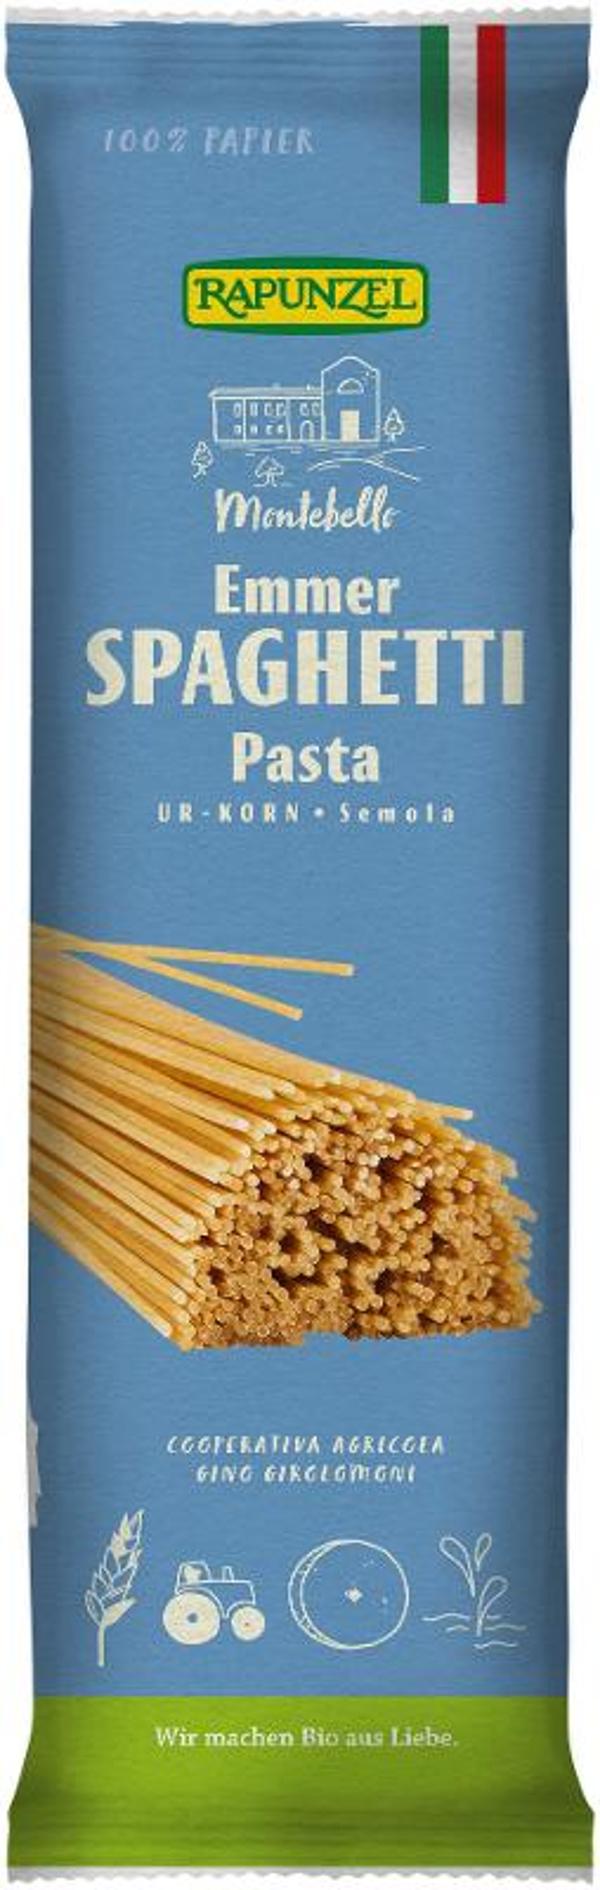 Produktfoto zu Emmer Spaghetti Semola